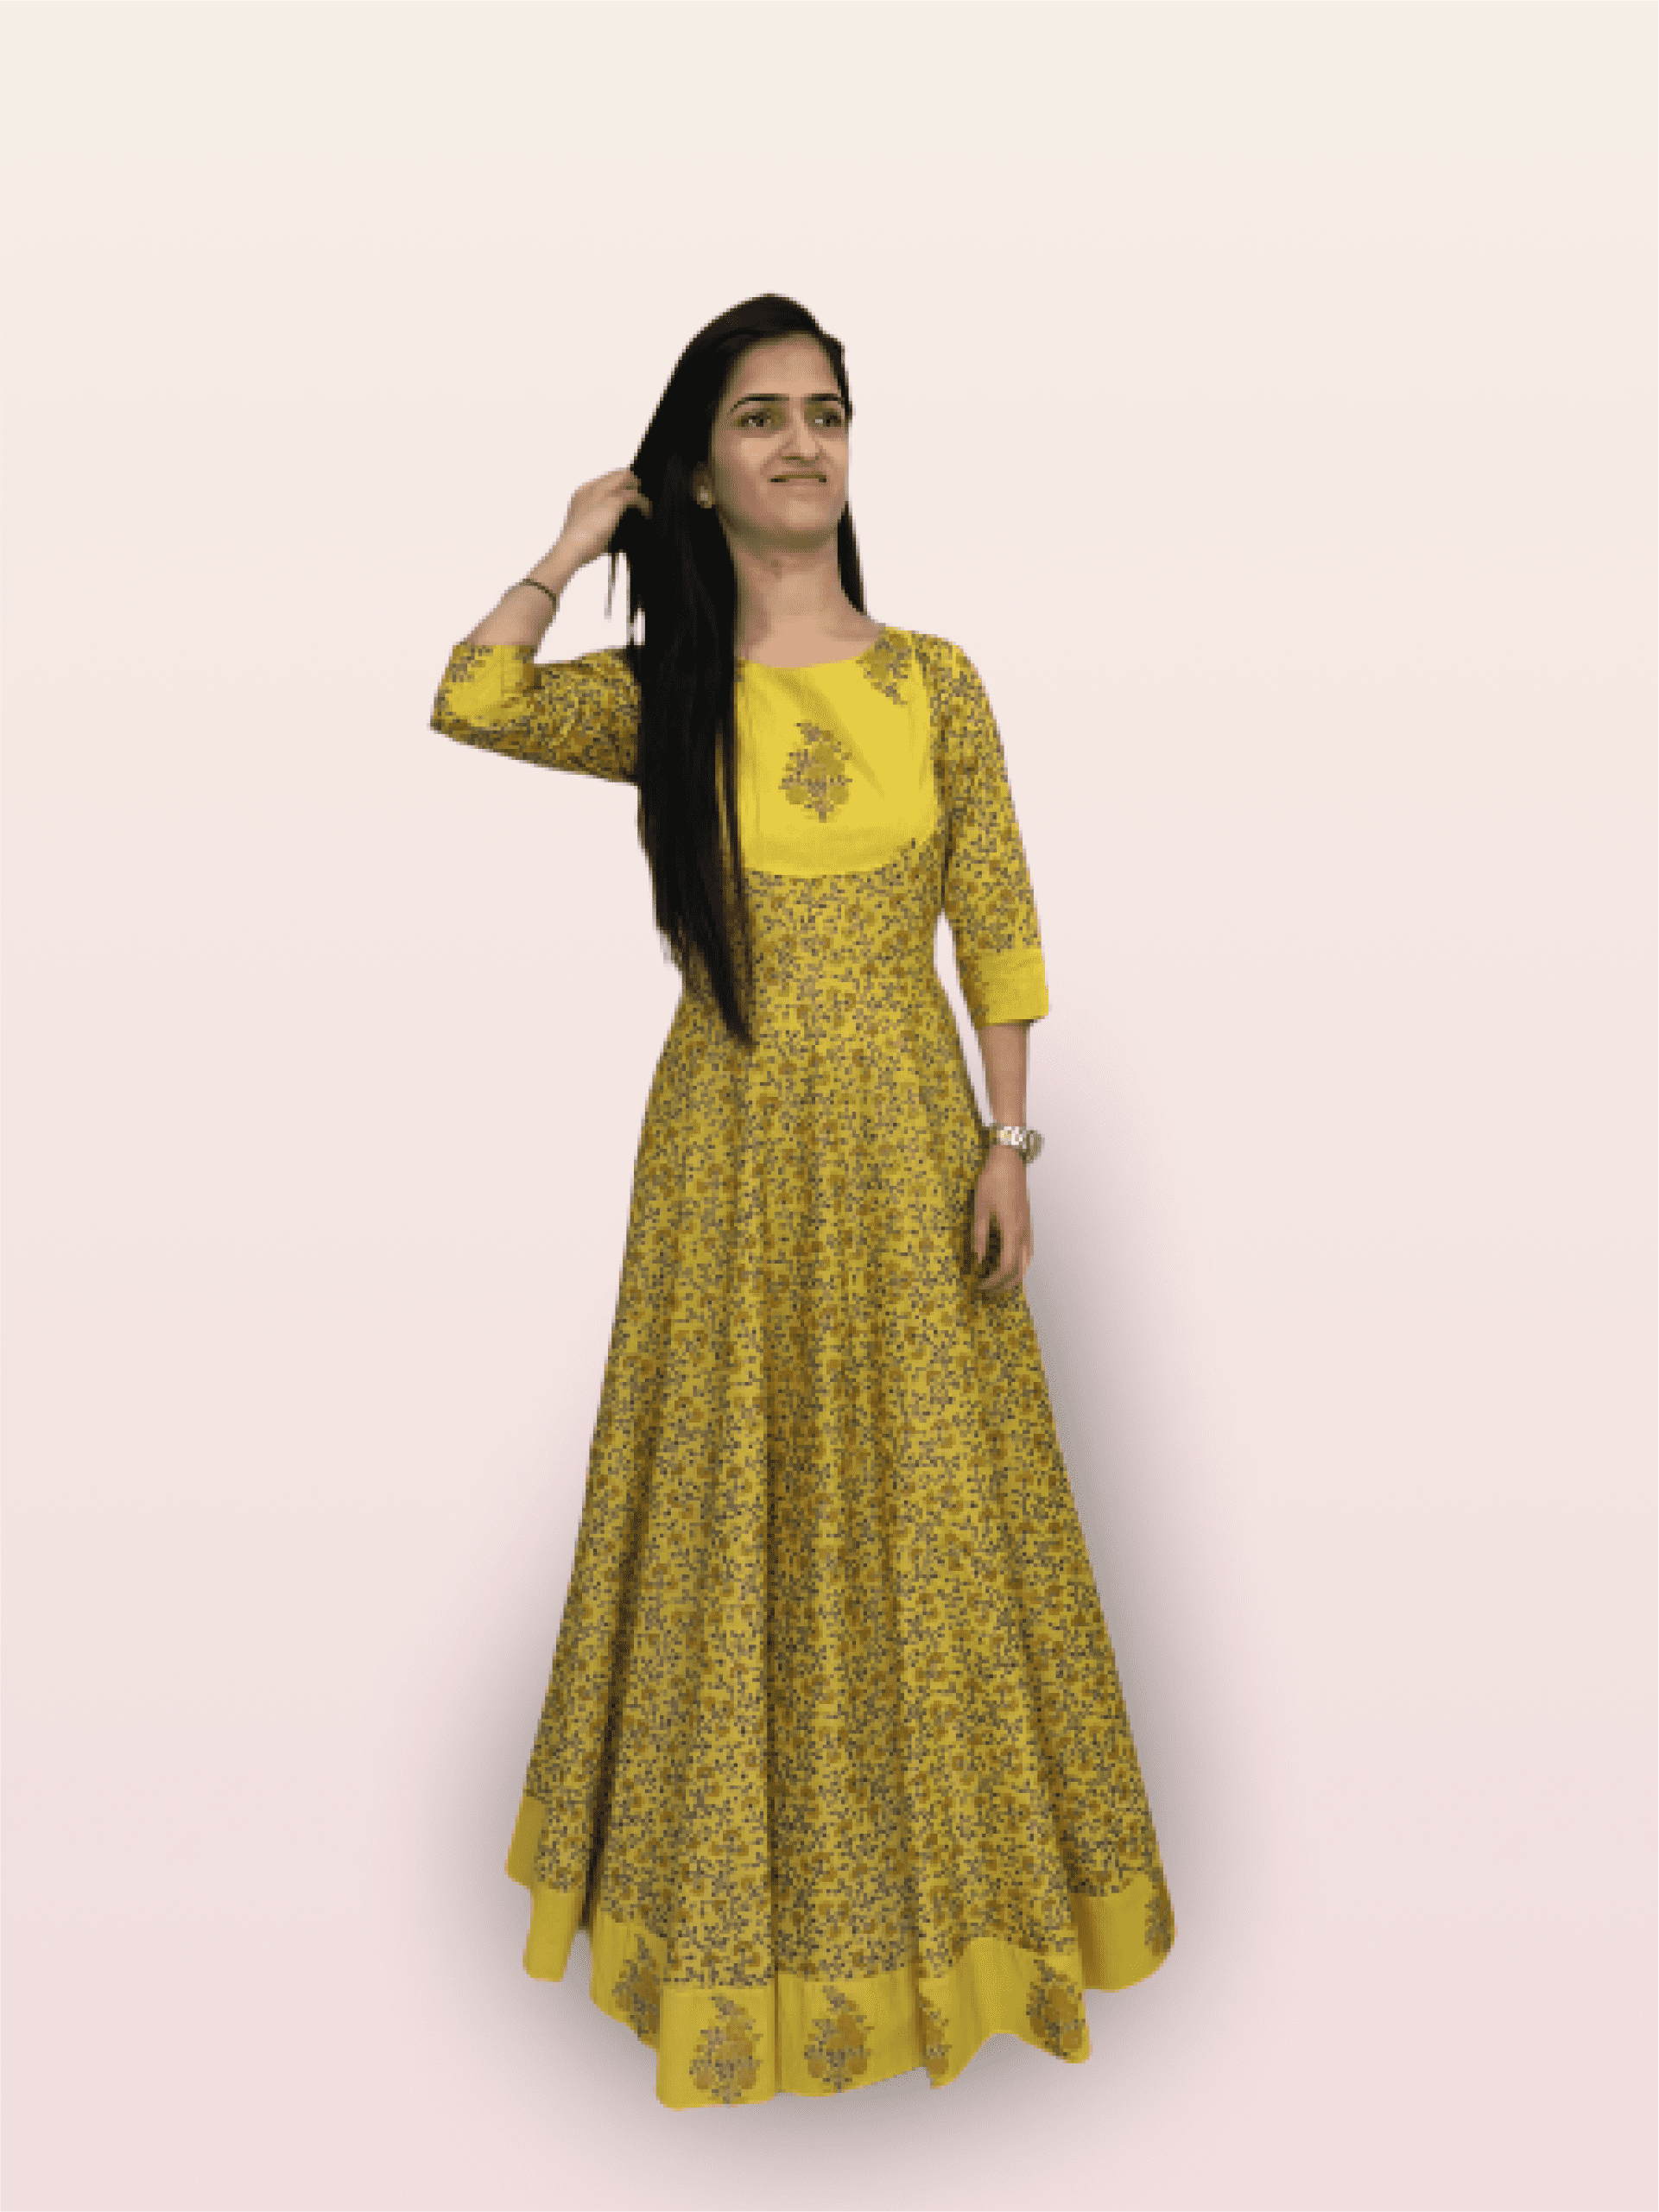 Farah Yoke Dress | Frock fashion, Kalamkari dresses, Dress indian style